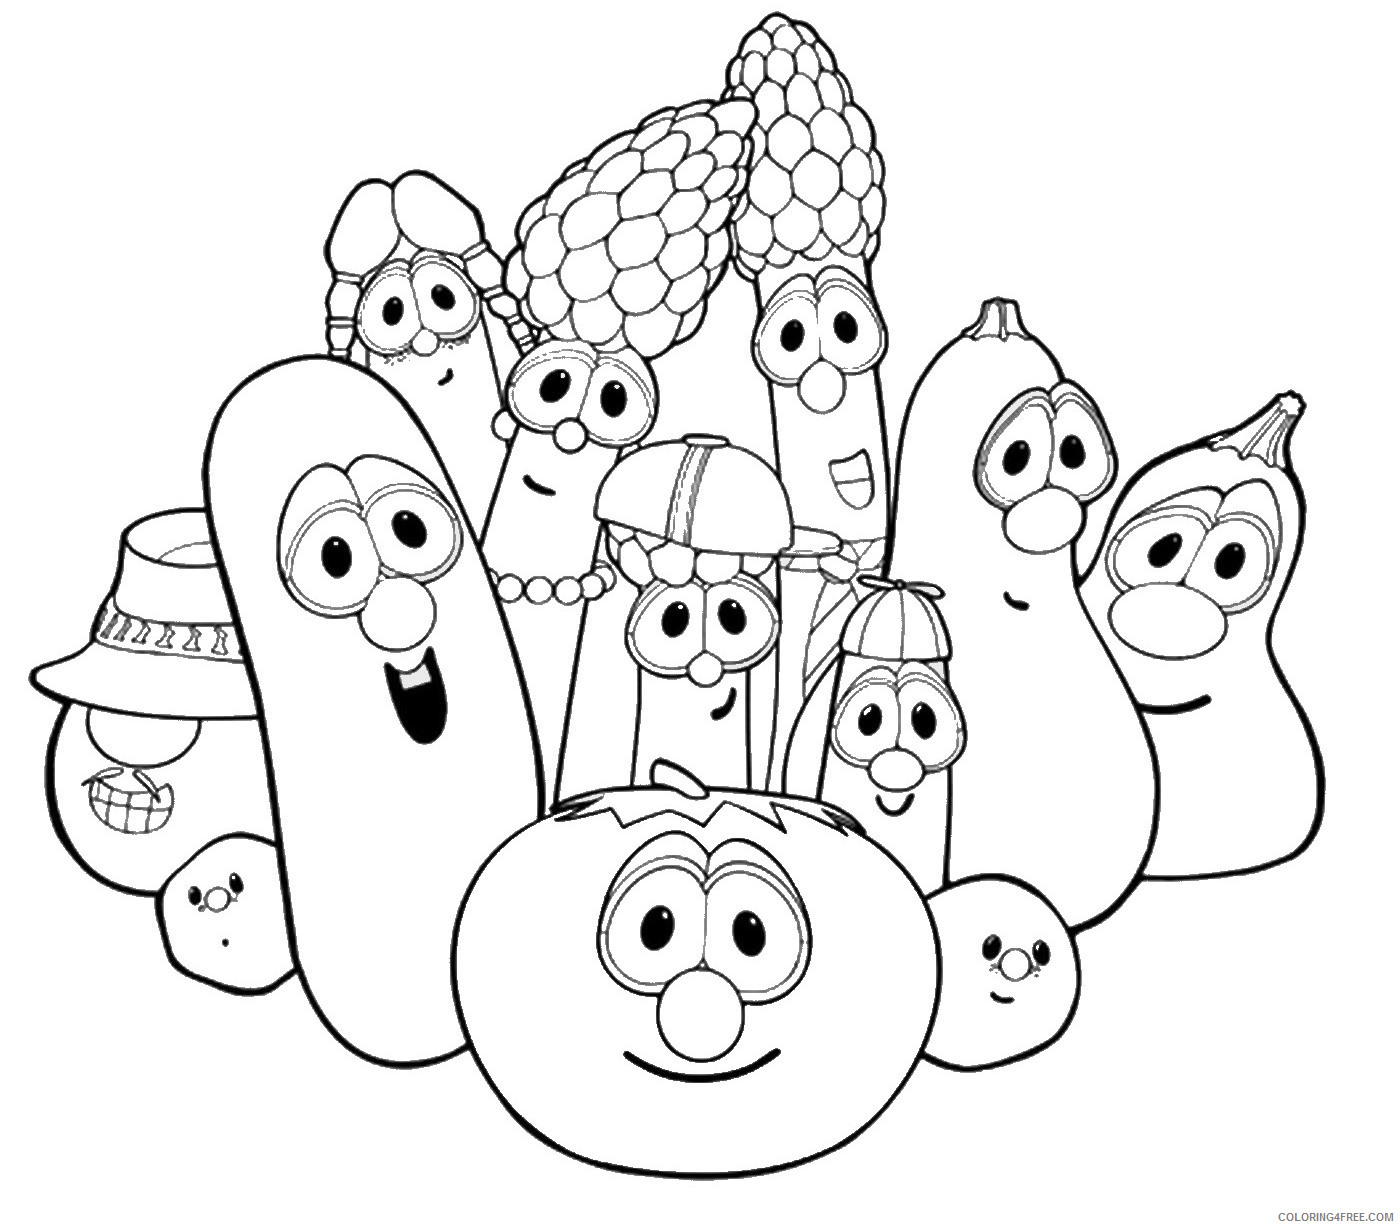 VeggieTales Coloring Pages Cartoons veggie_tales_cl_41 Printable 2020 6844 Coloring4free